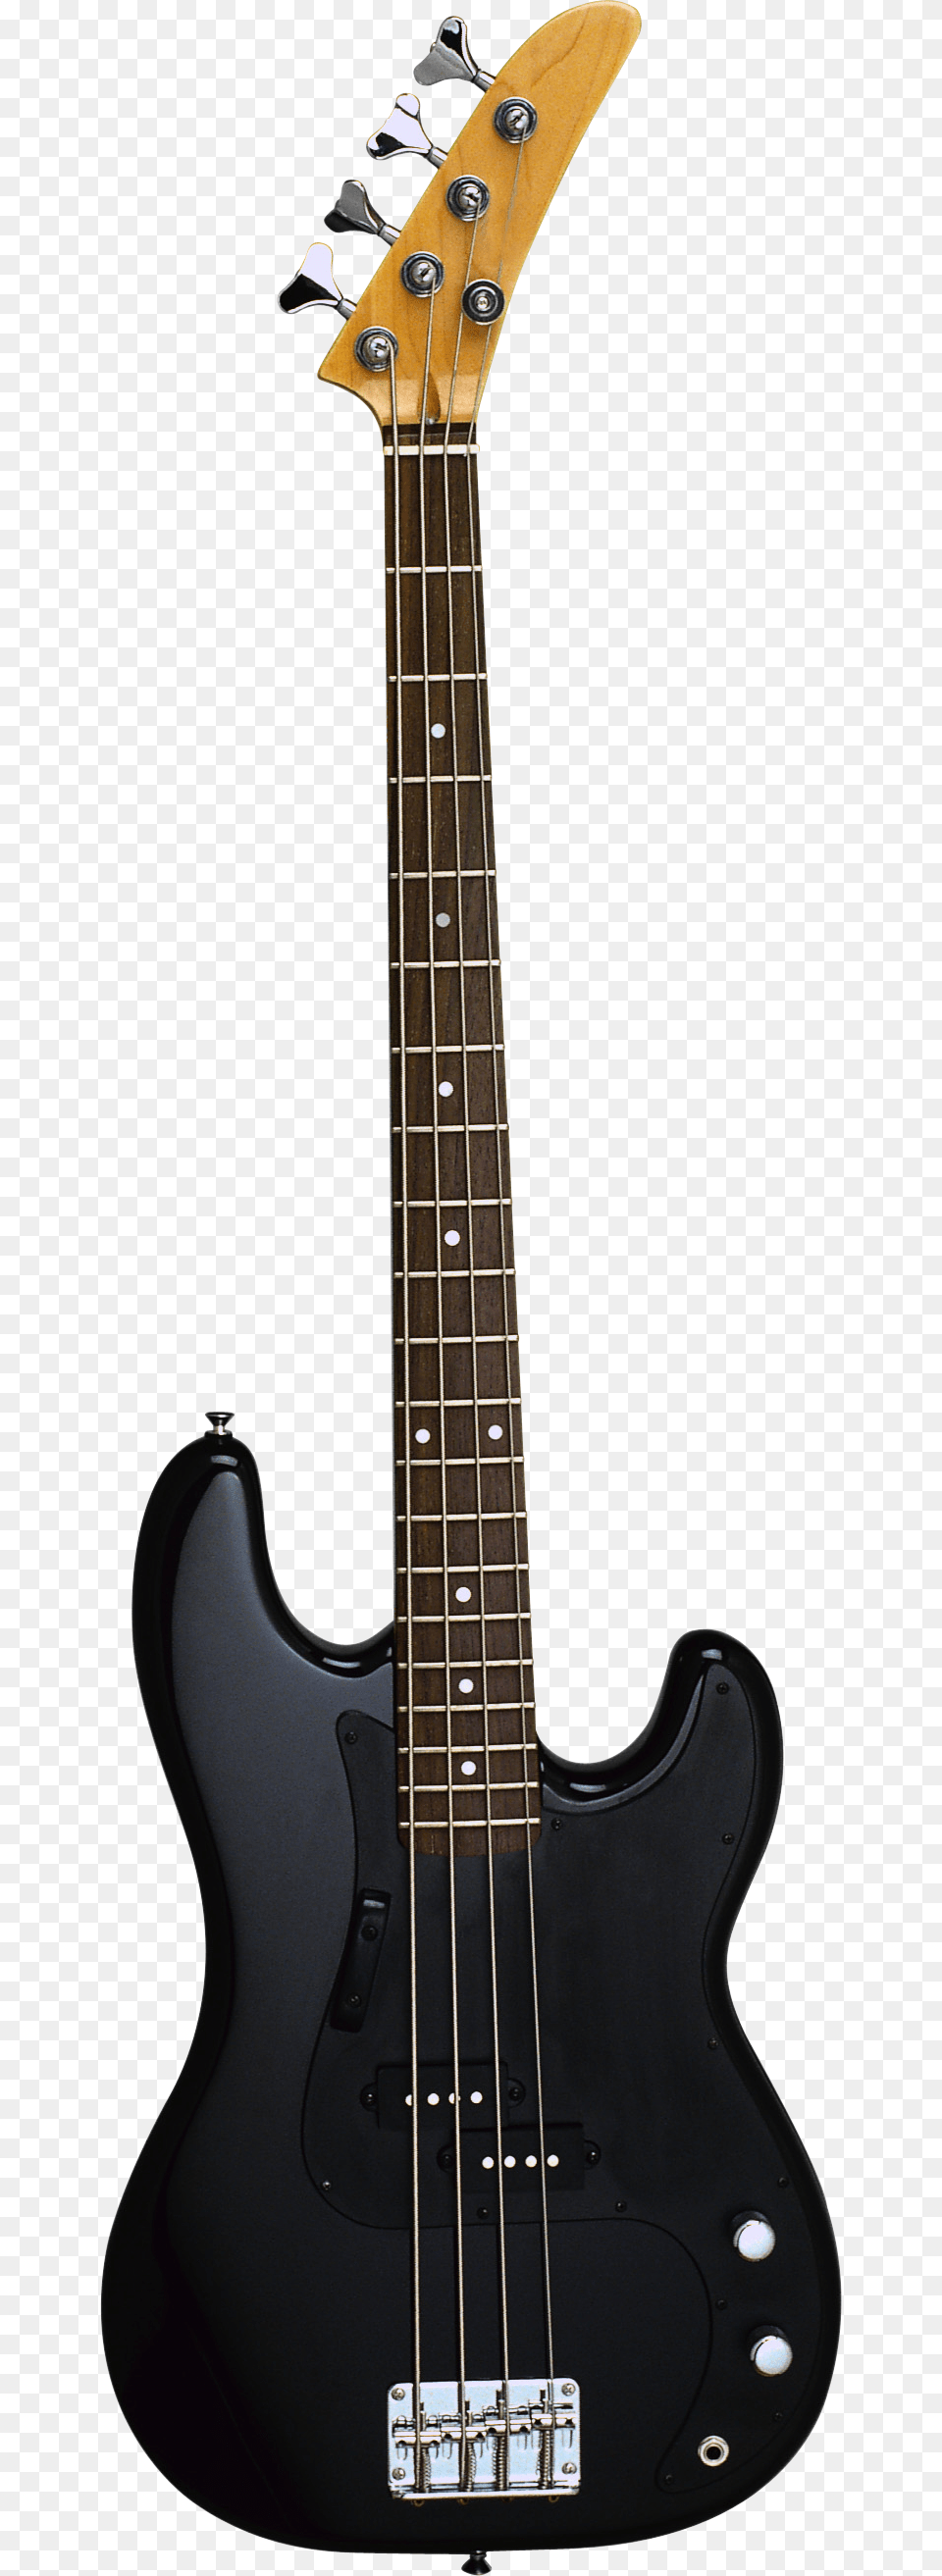 Black Electric Guitar Guitar For Picsart, Bass Guitar, Musical Instrument Free Transparent Png